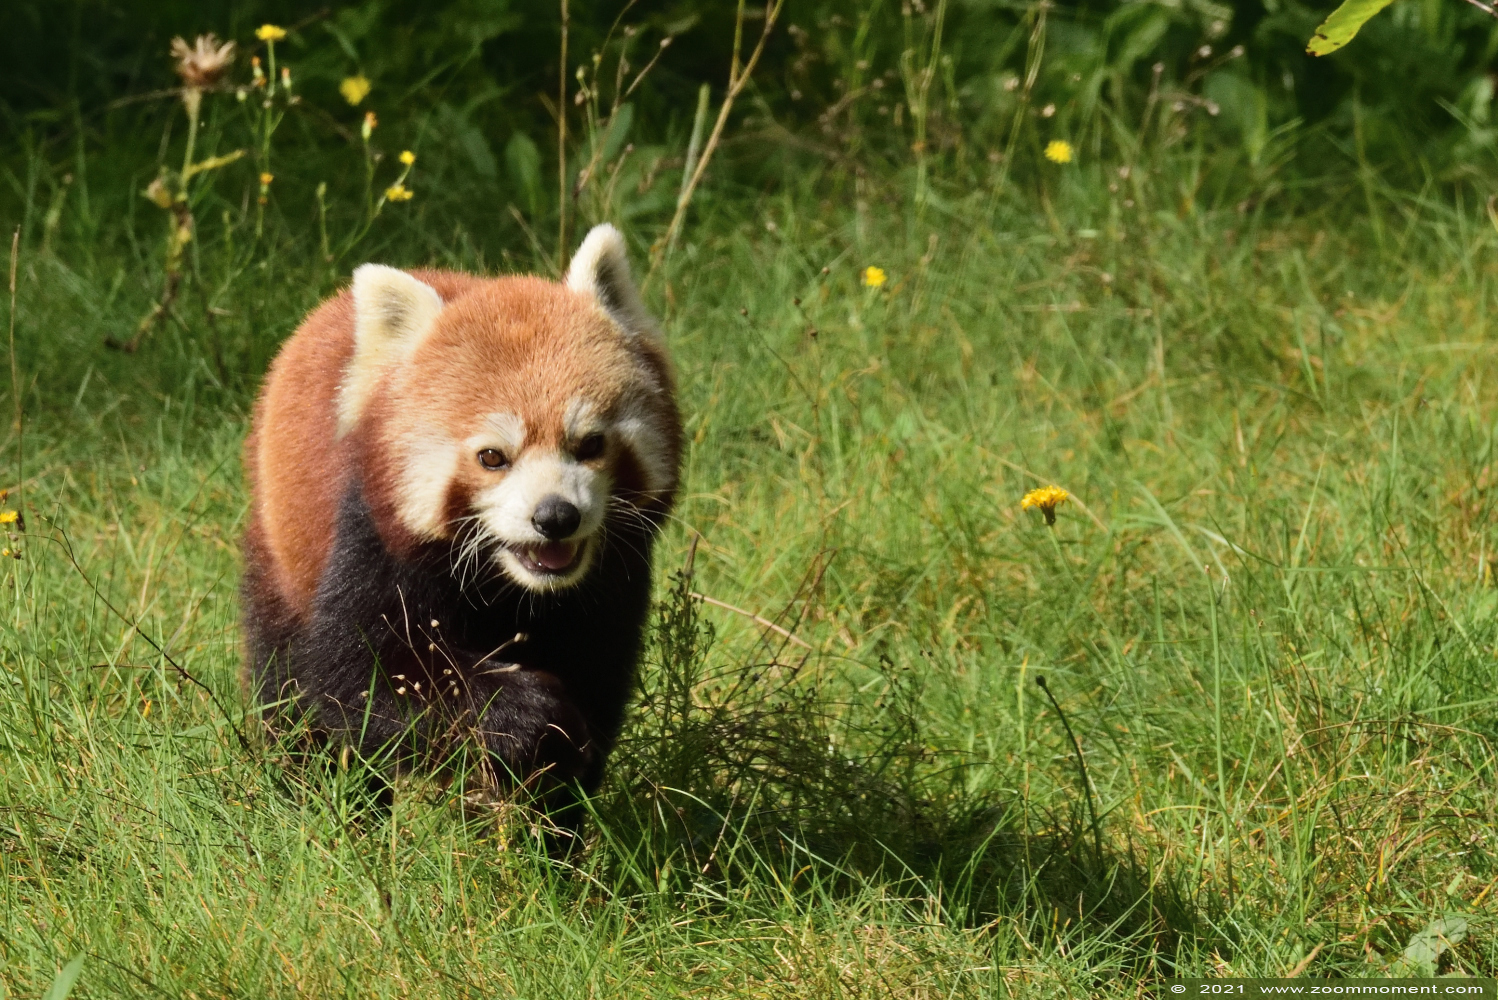 kleine of rode panda ( Ailurus fulgens ) lesser or red panda
Trefwoorden: Safaripark Beekse Bergen kleine rode panda Ailurus fulgens lesser red panda